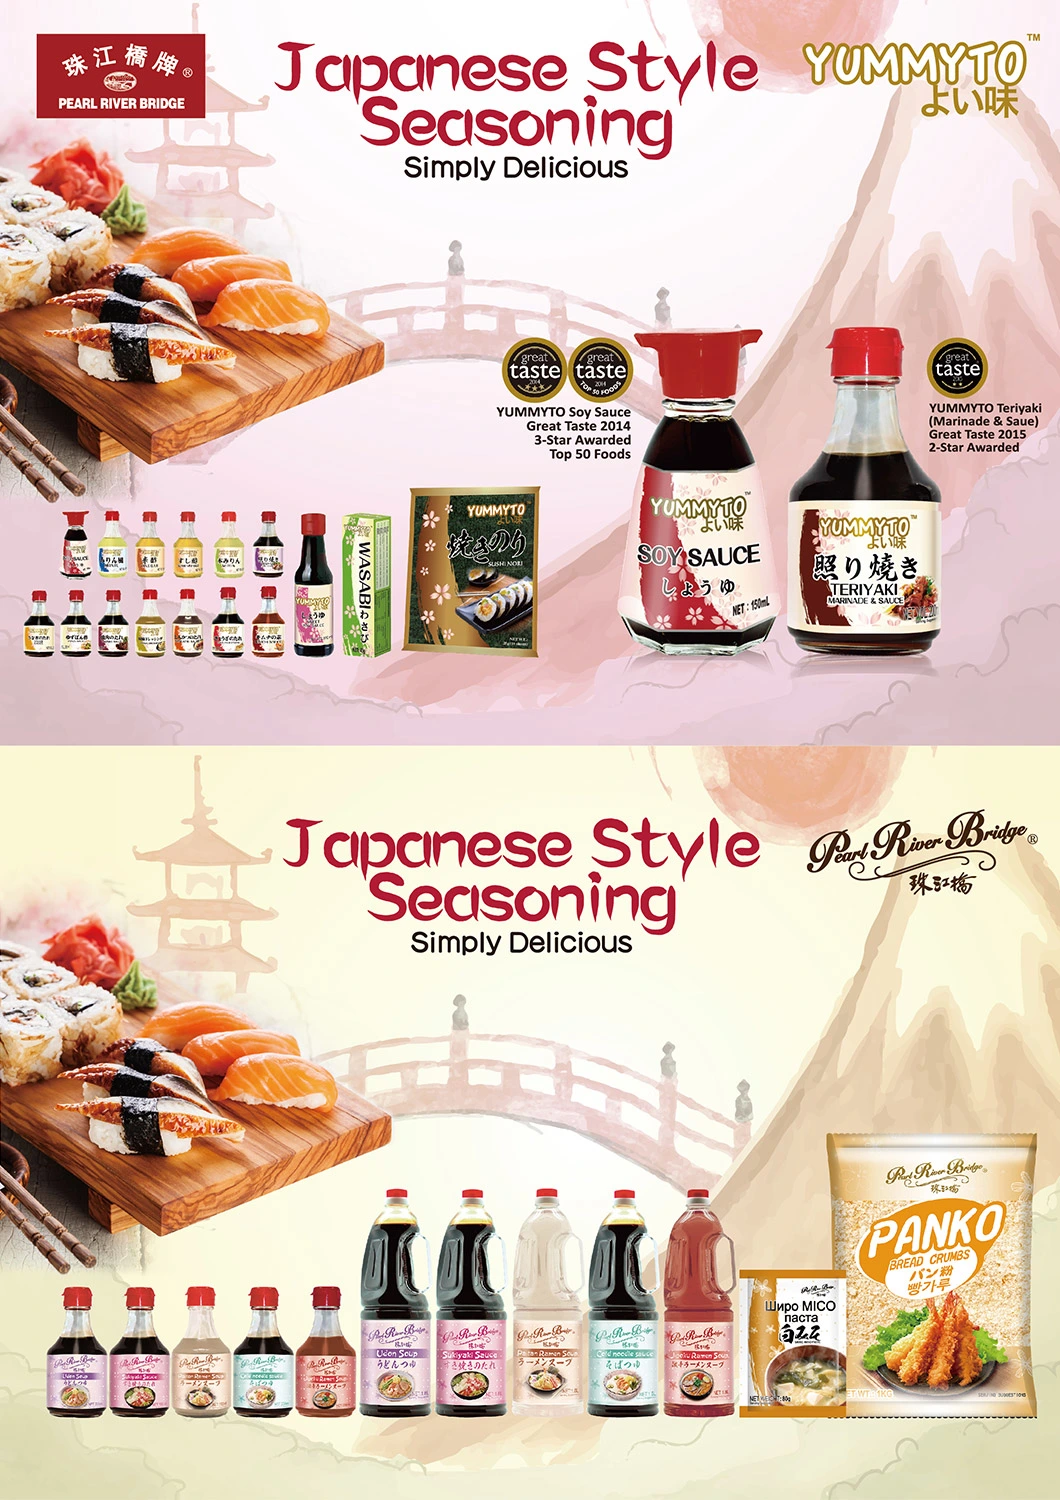 Yummyto Brand Sushi Vinegar 200ml Japanese Style Sauce for Sushi